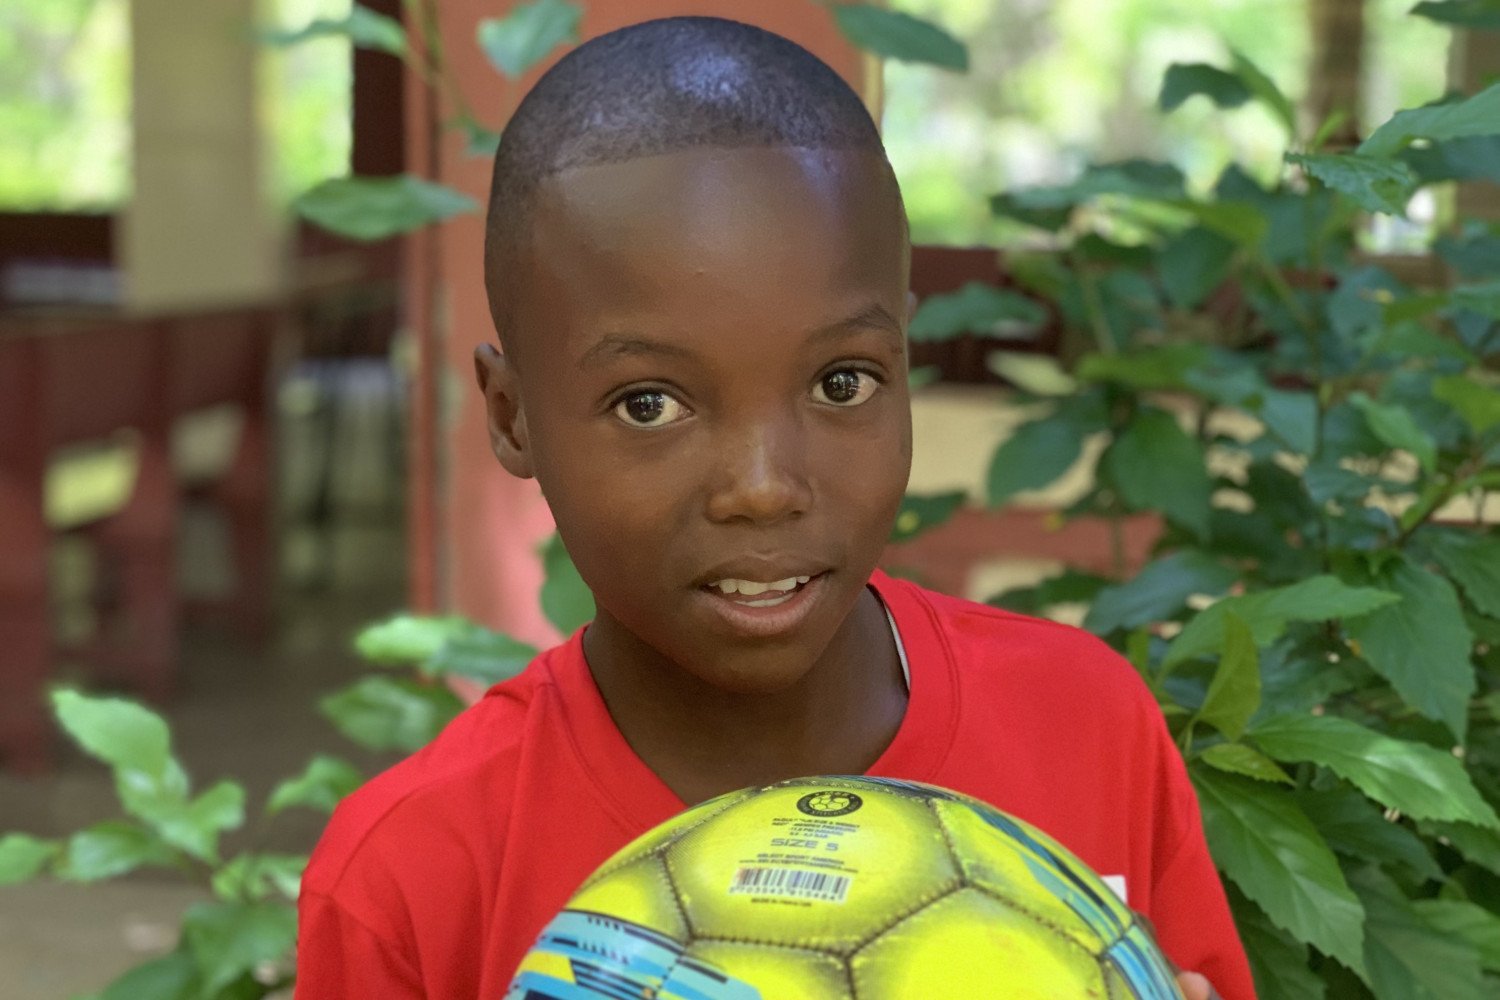 Haitian boy holding a soccer ball